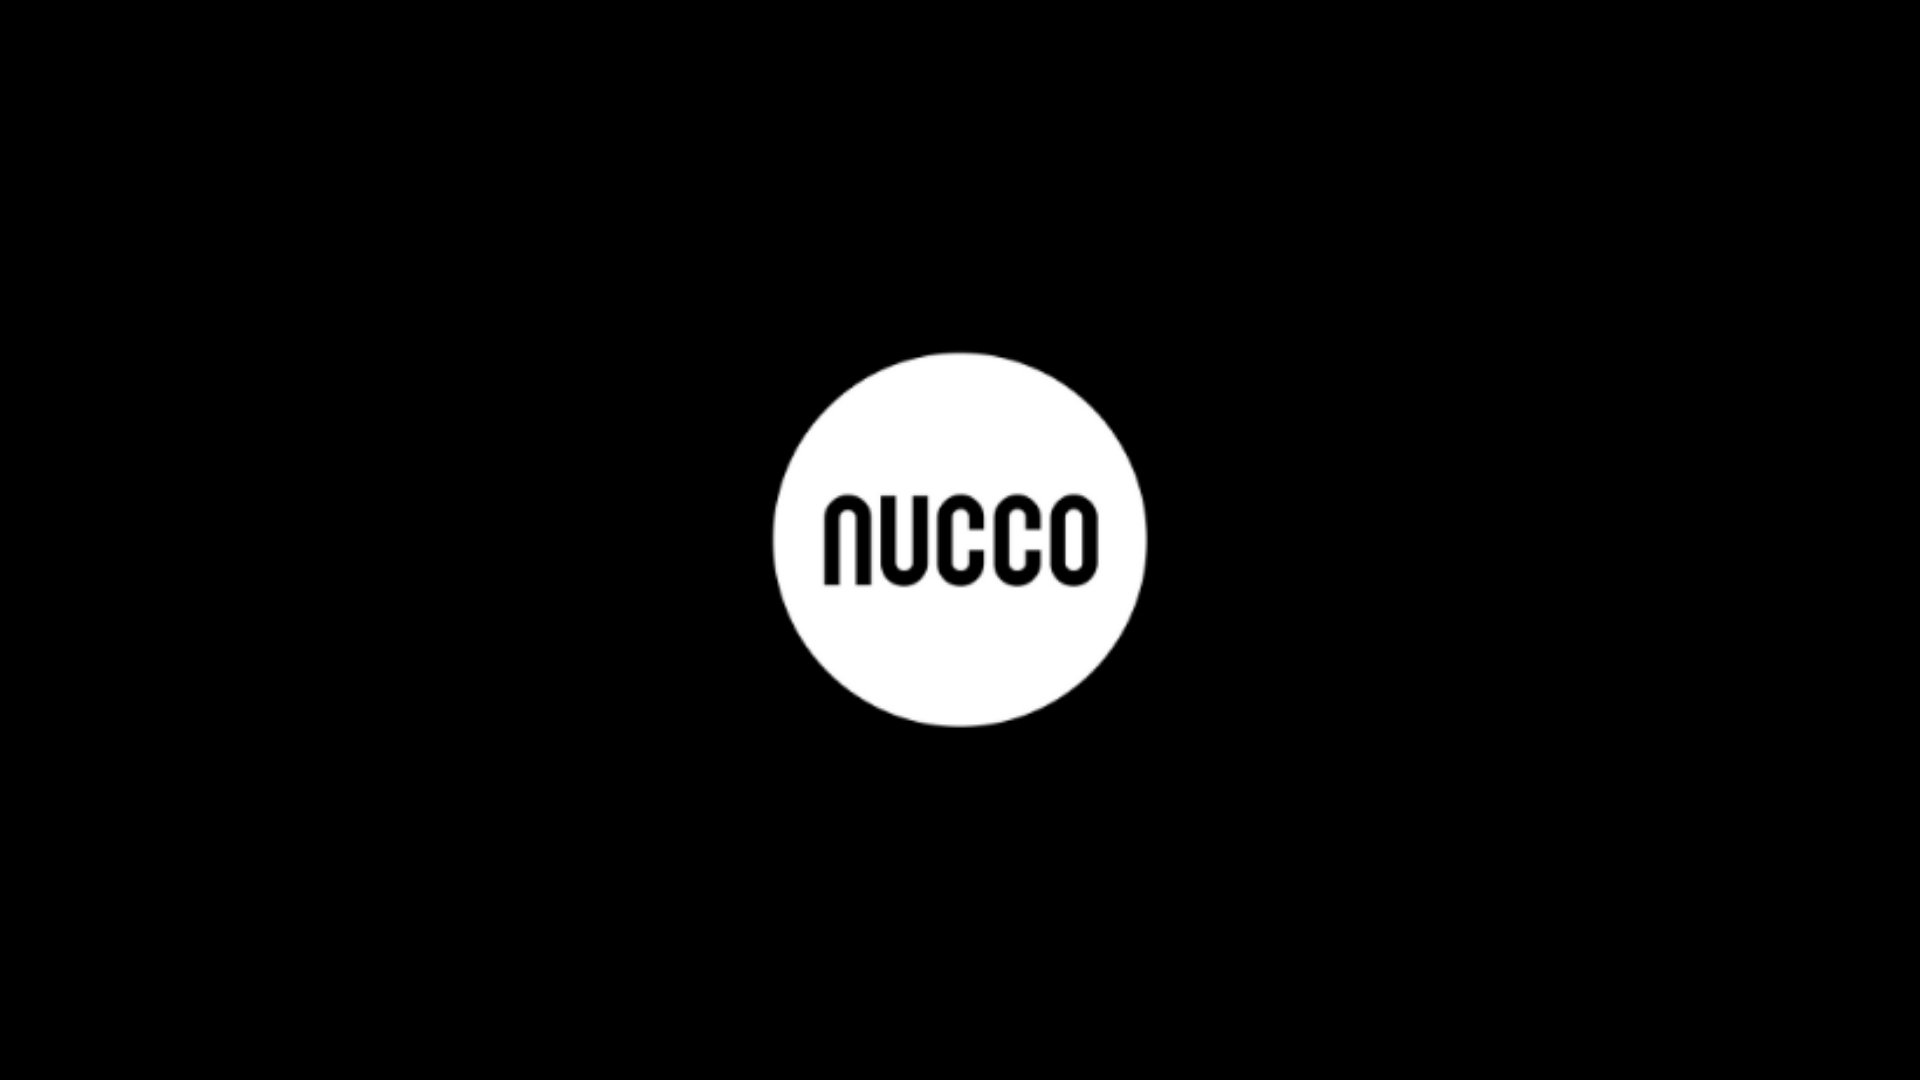 nucco logo